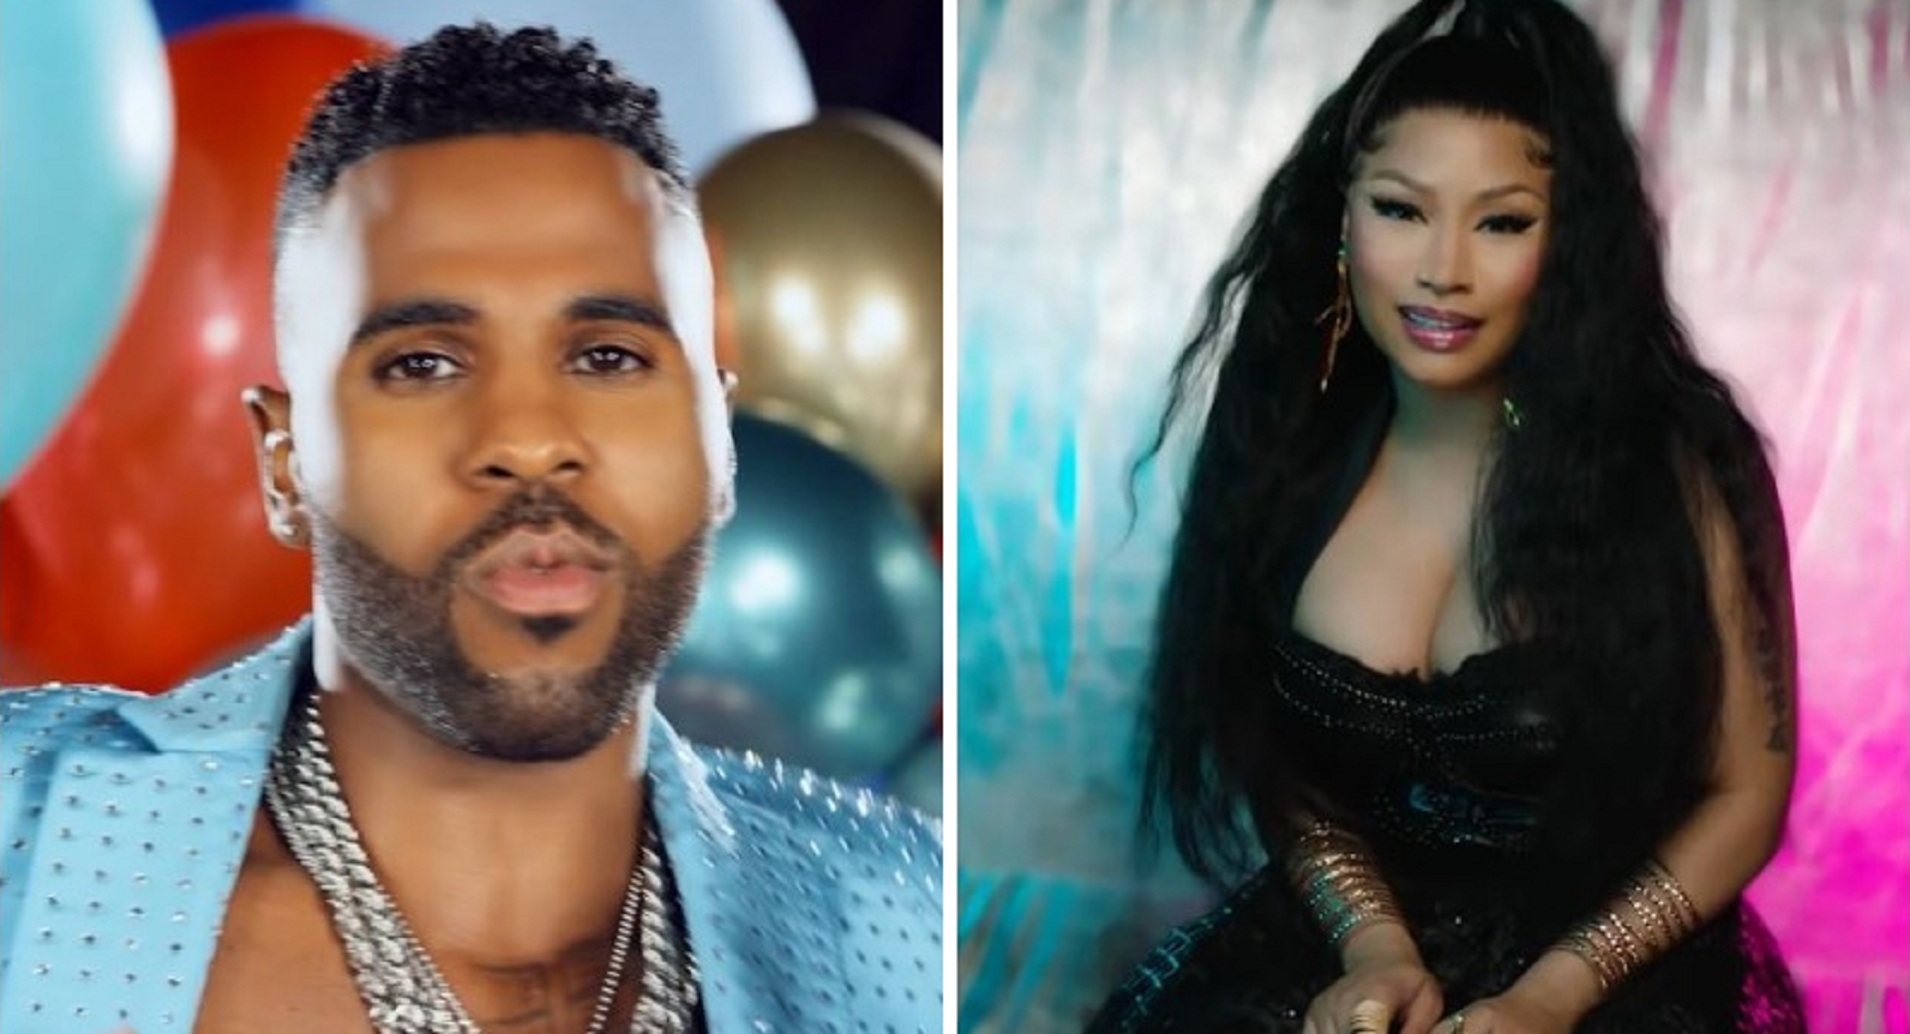 New Video: Jason Derulo and Nicki Minaj Sample “Time To Say Goodbye”, in David Guetta Remix!